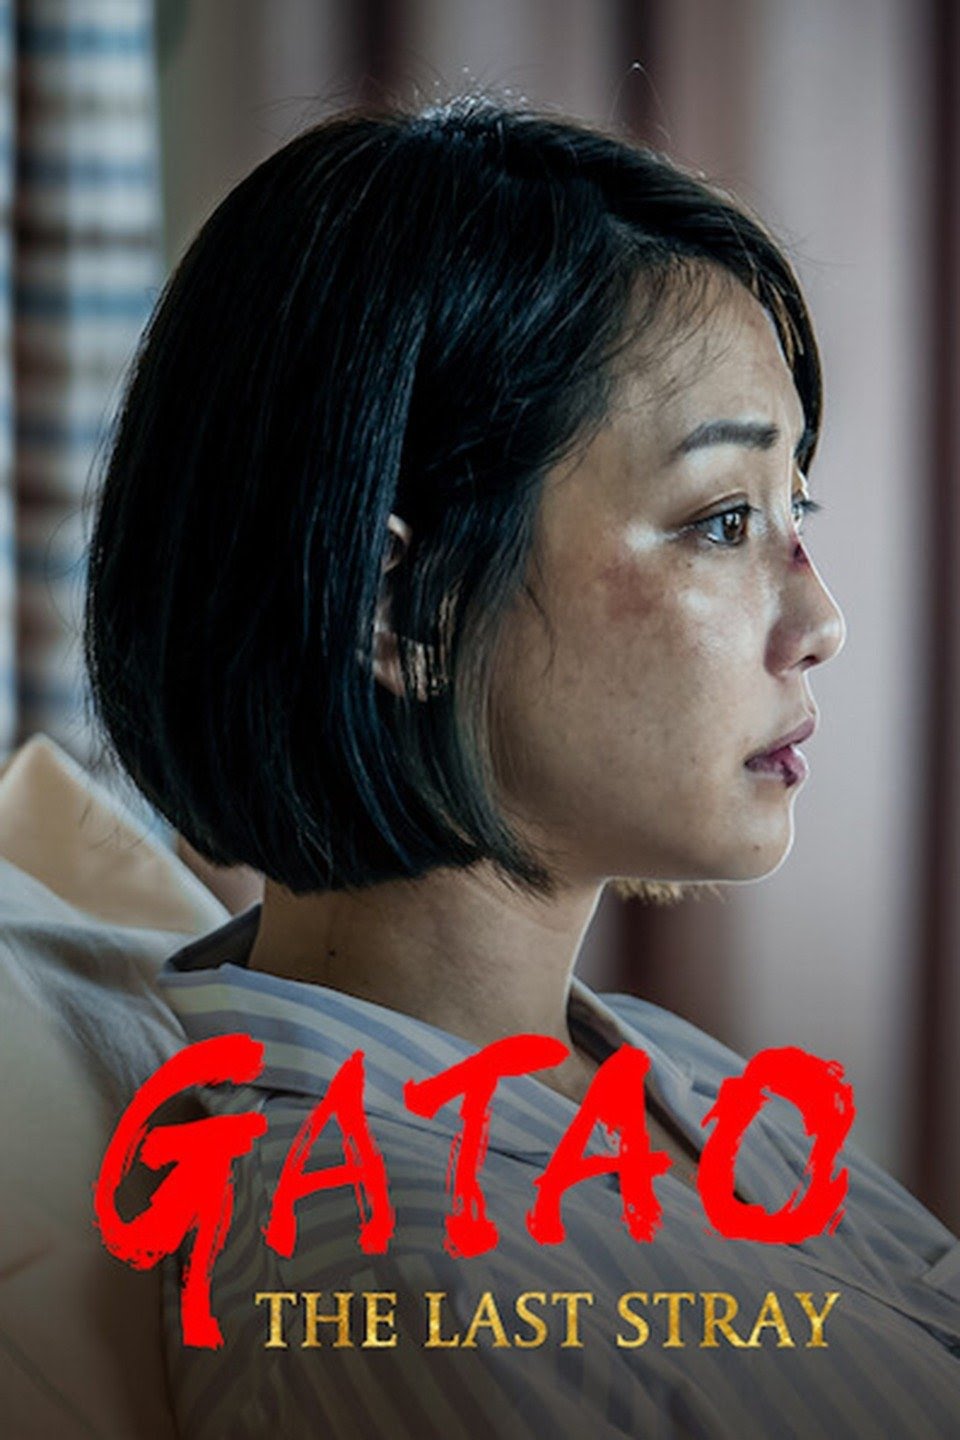 [MINI Super-HQ] Gatao: the Last Stray (2021) เจ้าพ่อ: หัวใจพเนจร [1080p] [NETFLIX] [พากย์จีน 5.1] [Soundtrack บรรยายไทย + อังกฤษ] [เสียงจีน + ซับไทย] [PANDAFILE]